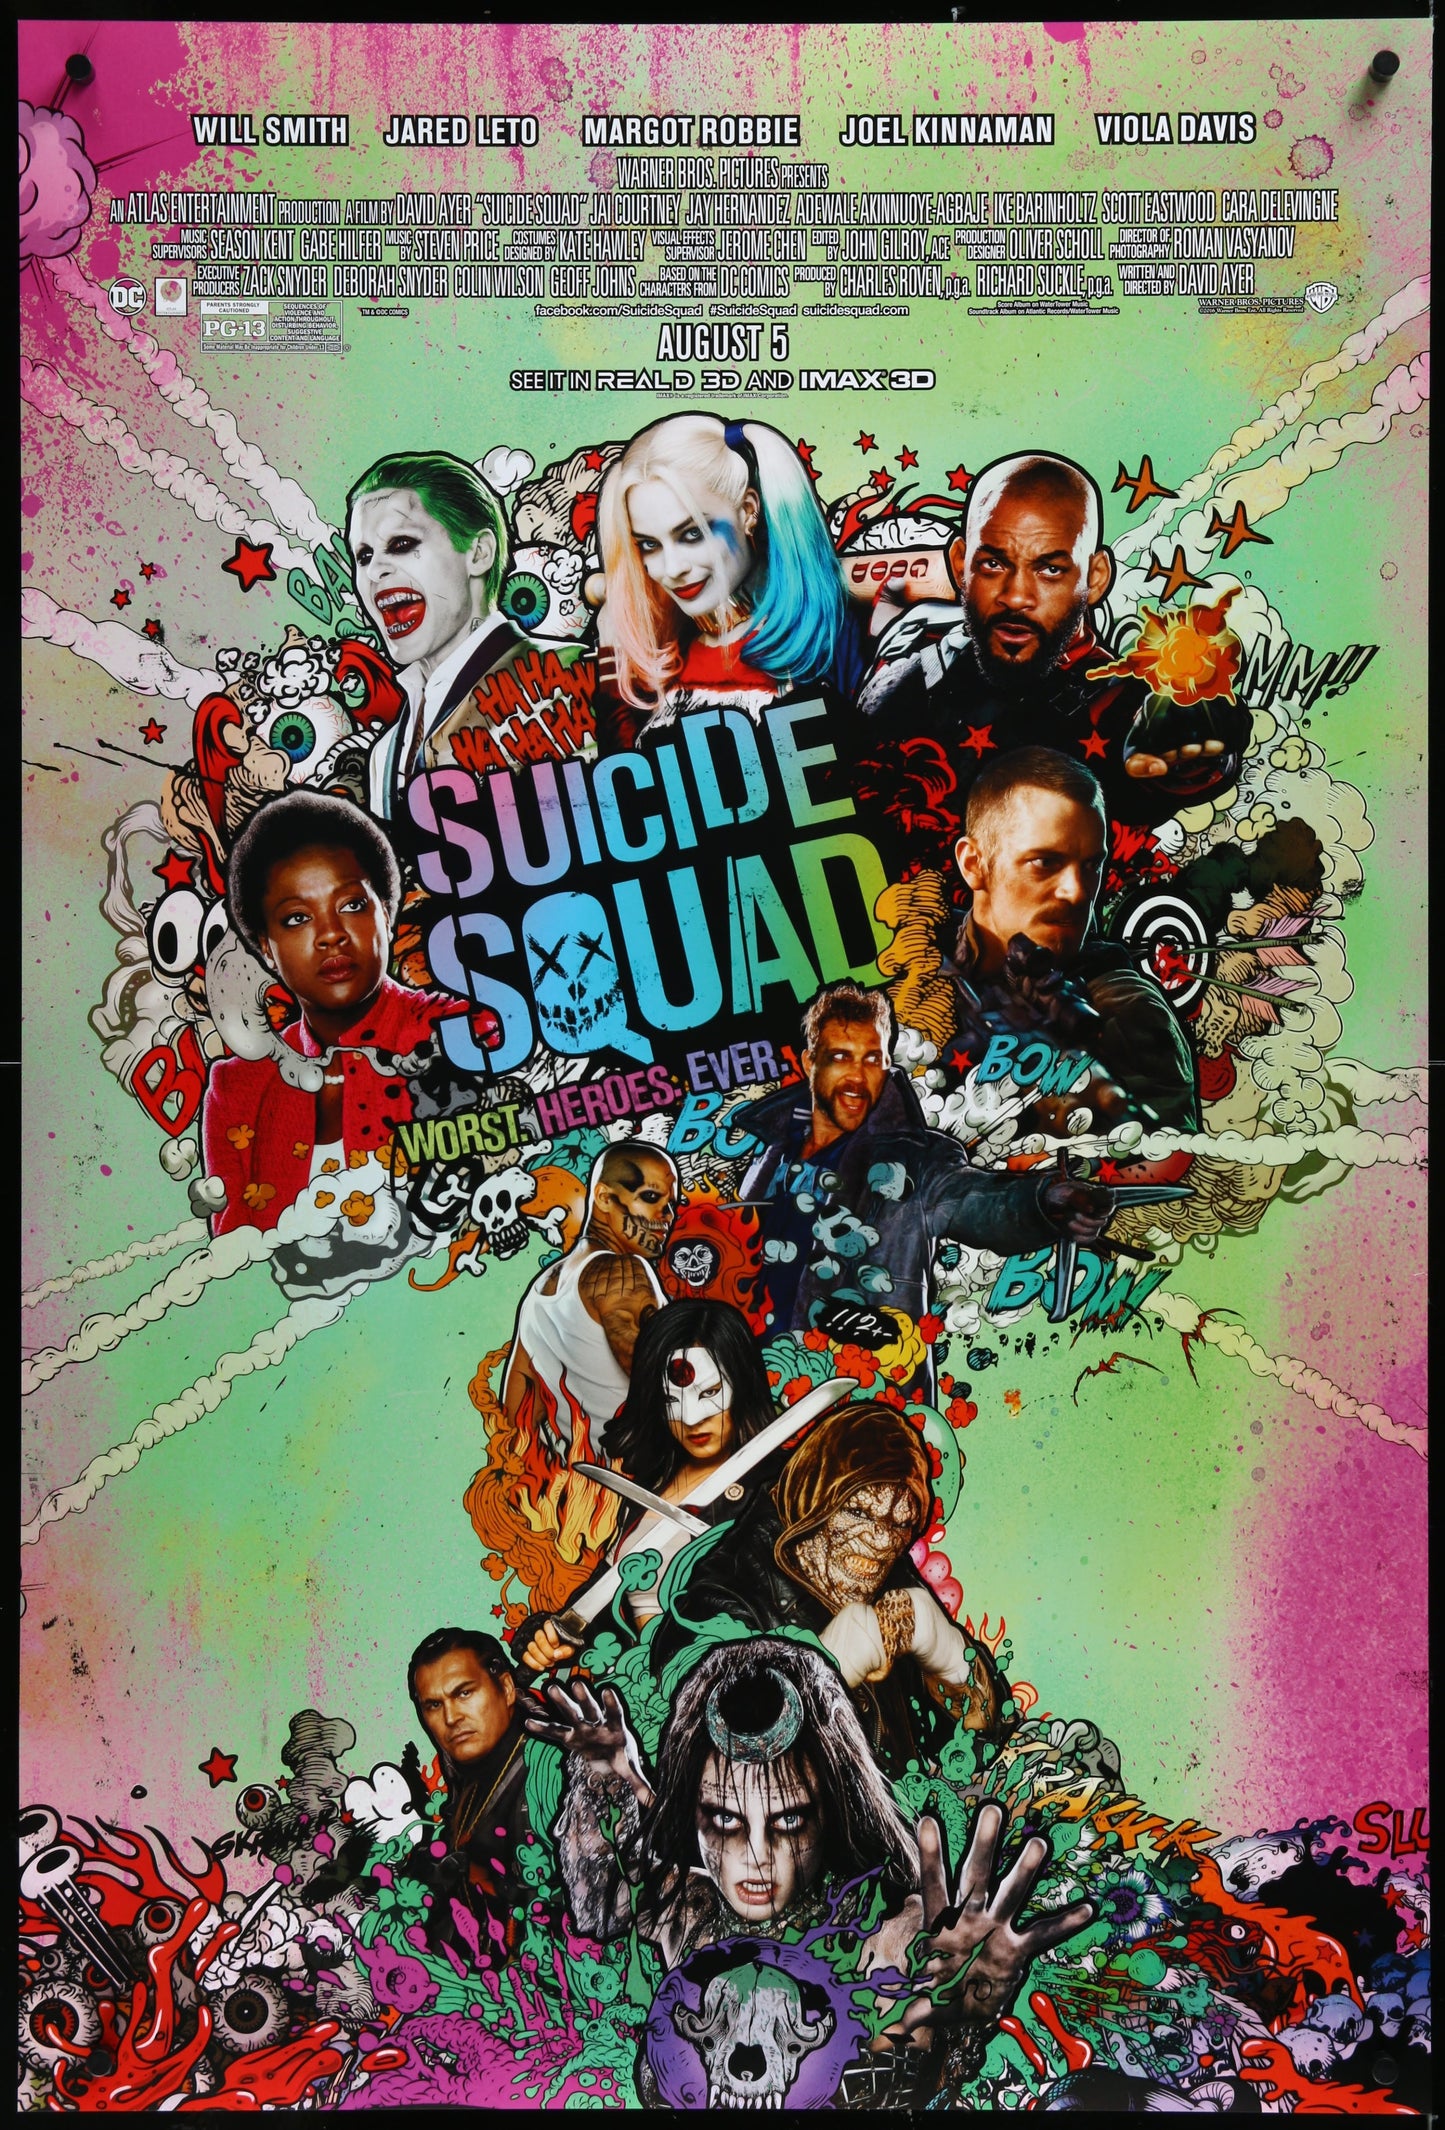 Suicide Squad - posterpalace.com